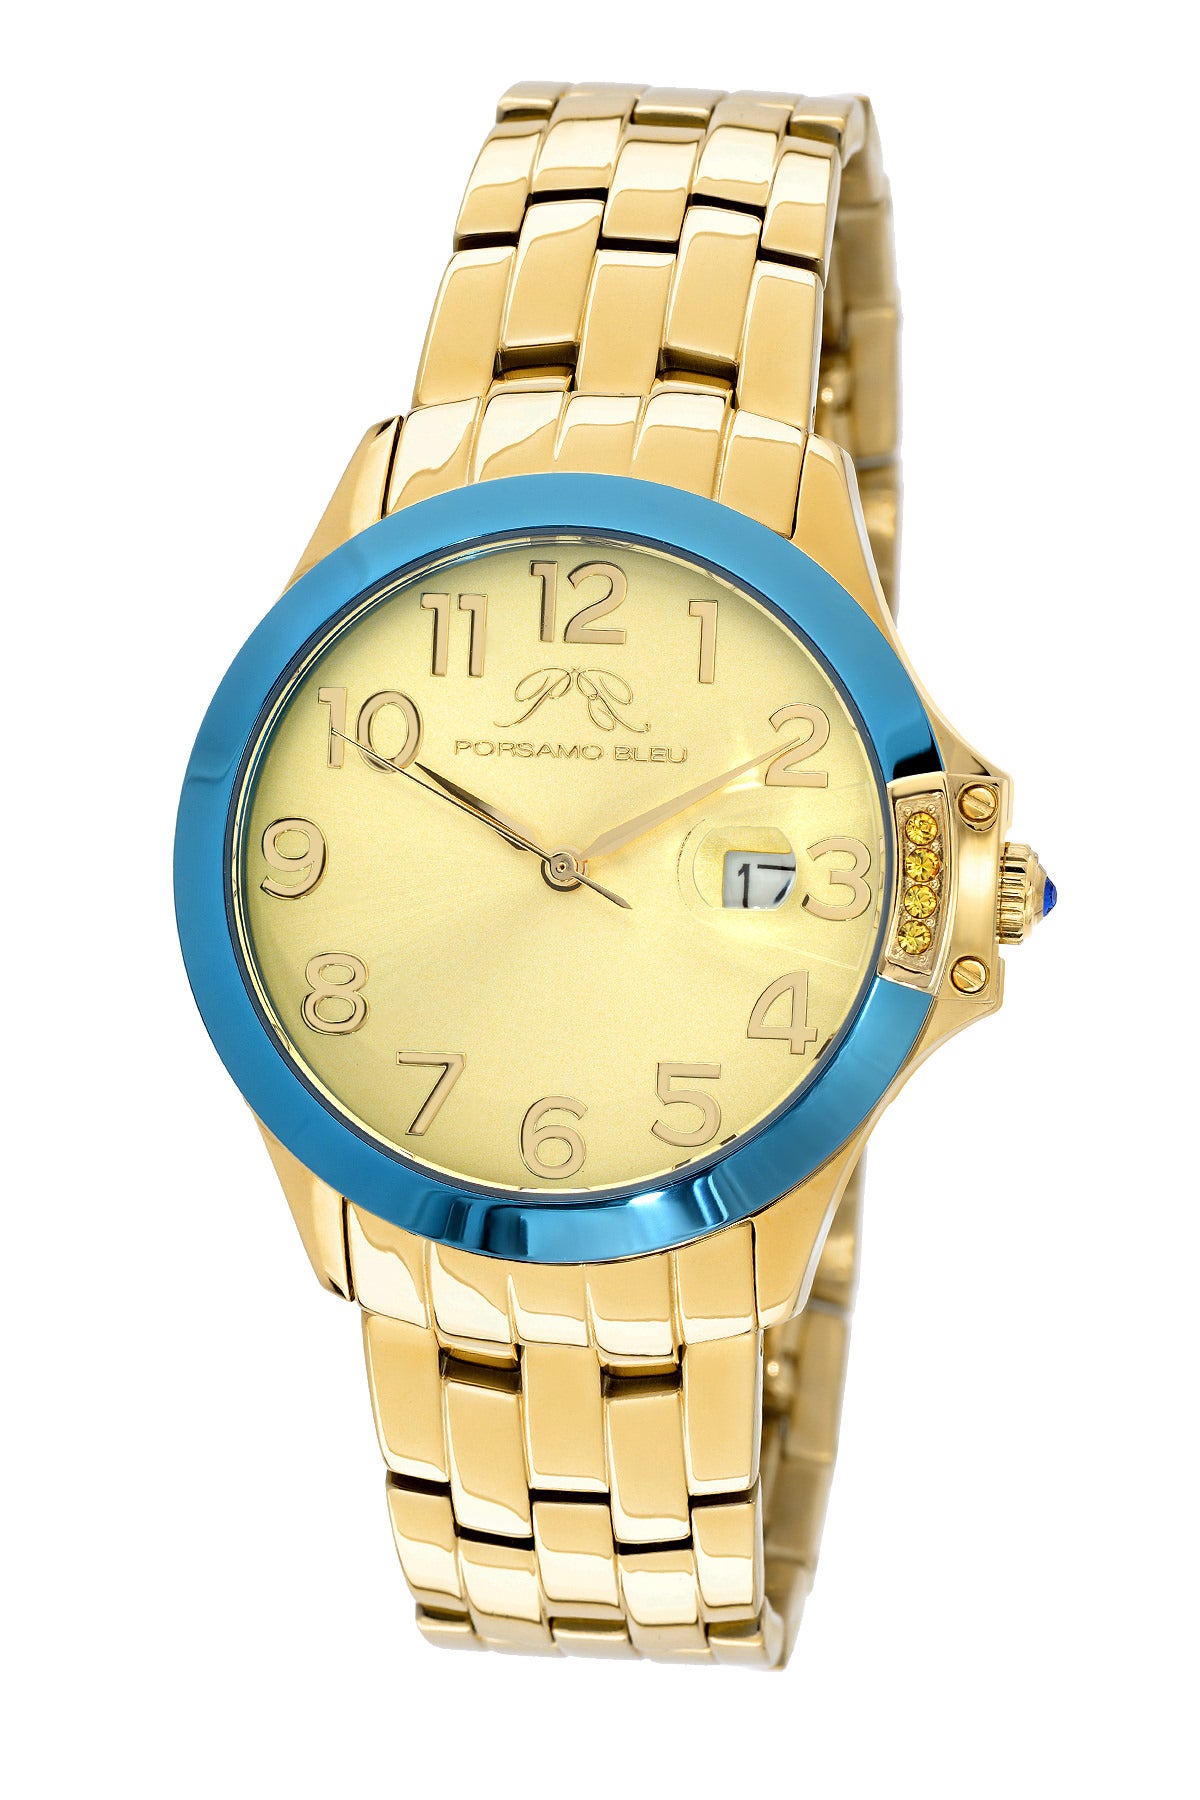 Porsamo Bleu Olivia luxury women's stainless steel watch, gold, blue 982BOLS